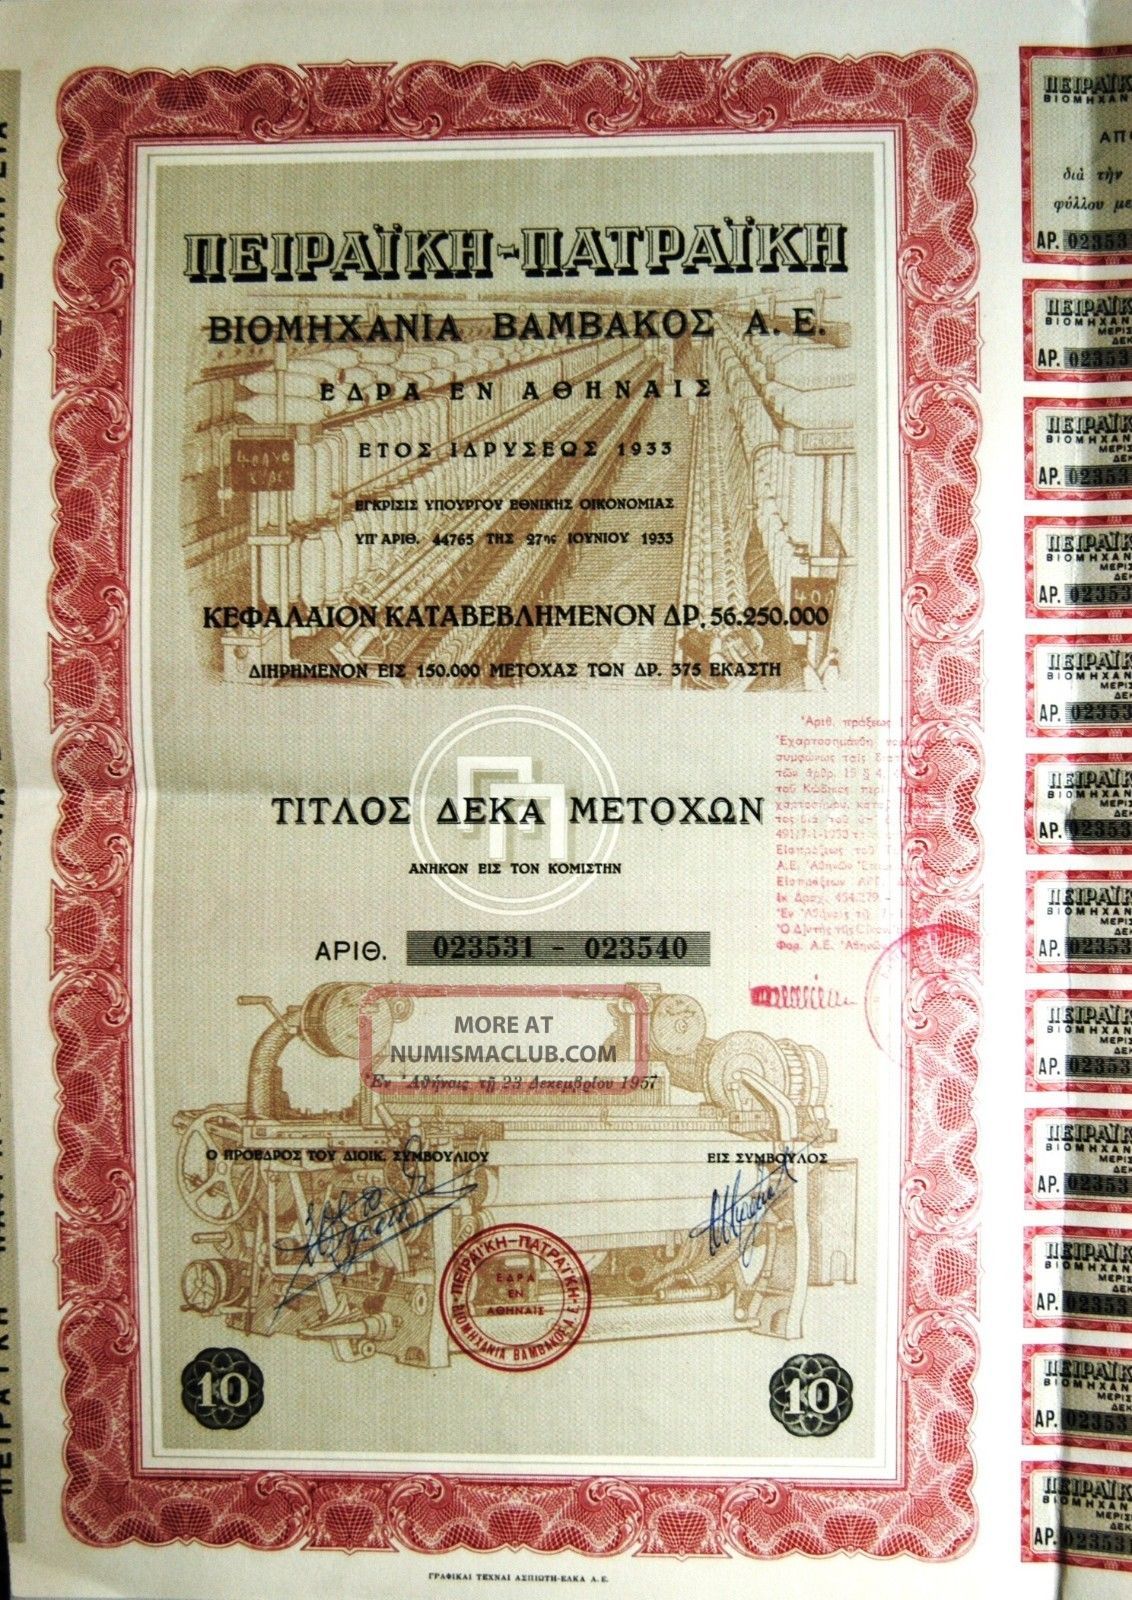 Greece 1957 Peiraiki - Patraiki Cotton - Weaving Industry Certificate Of 10 Shares World photo